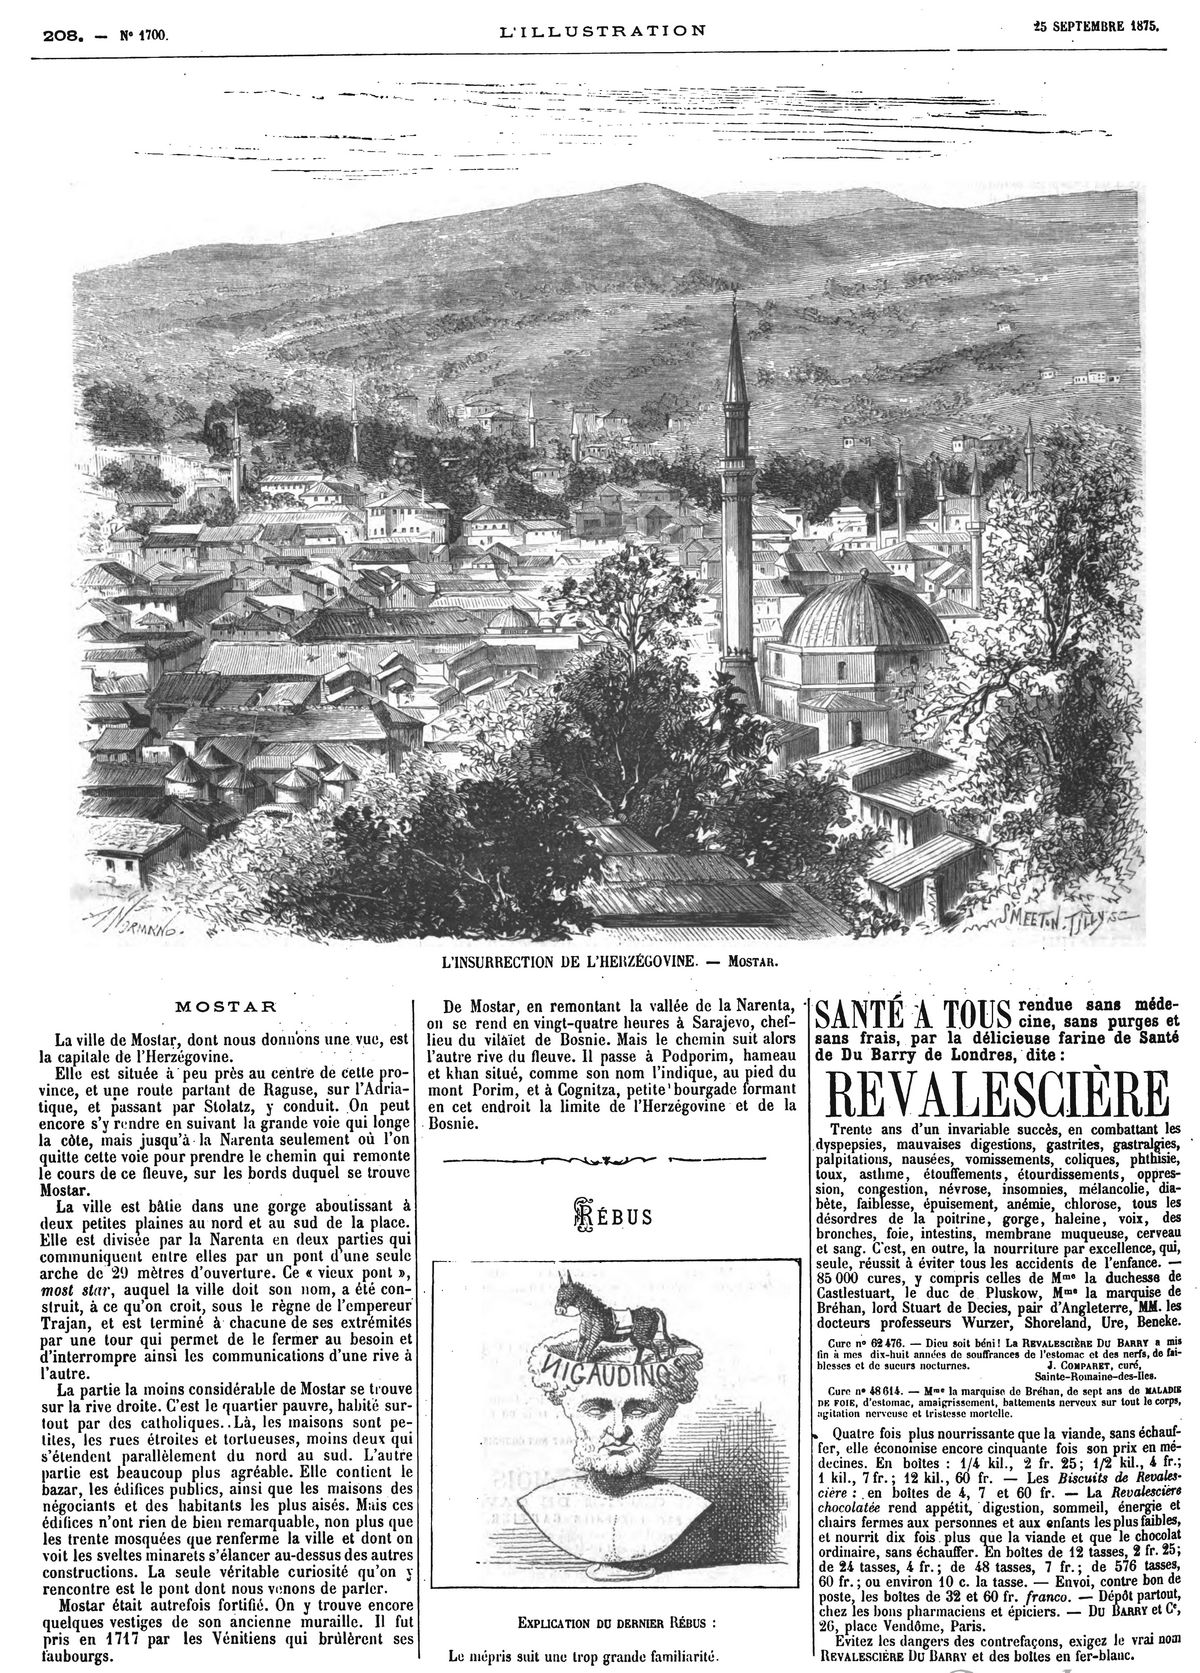 L’insurrection de l’Herzégovine: Mostar. 1875